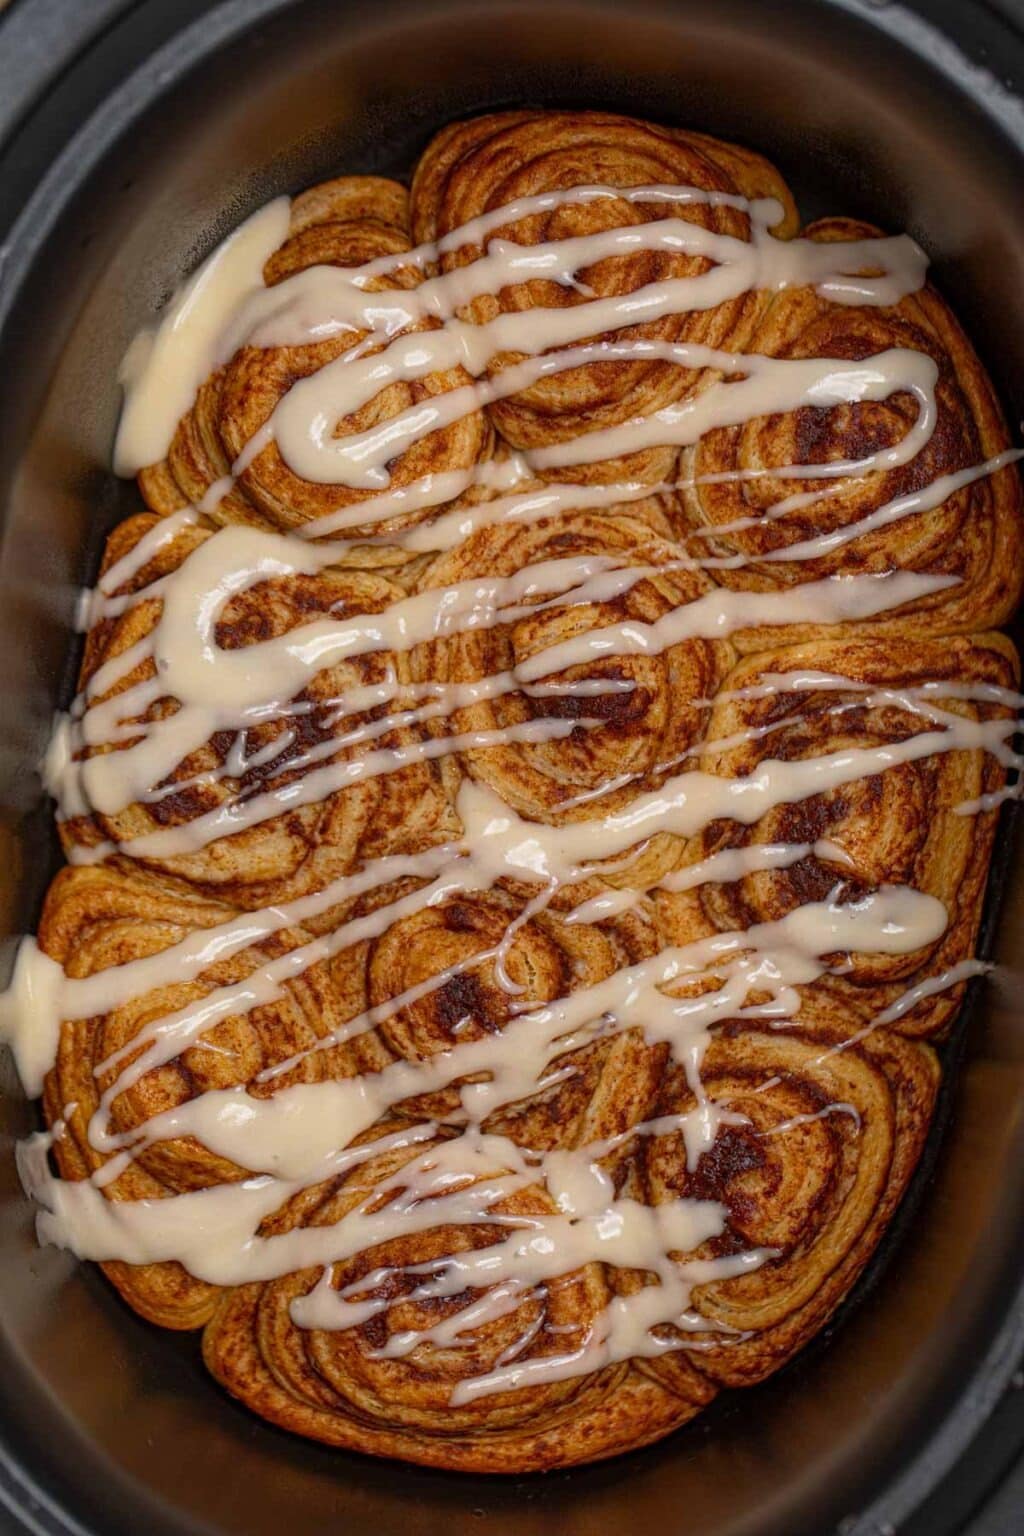 Cinnamon rolls in a crockpot drizzled with white sugar glaze.